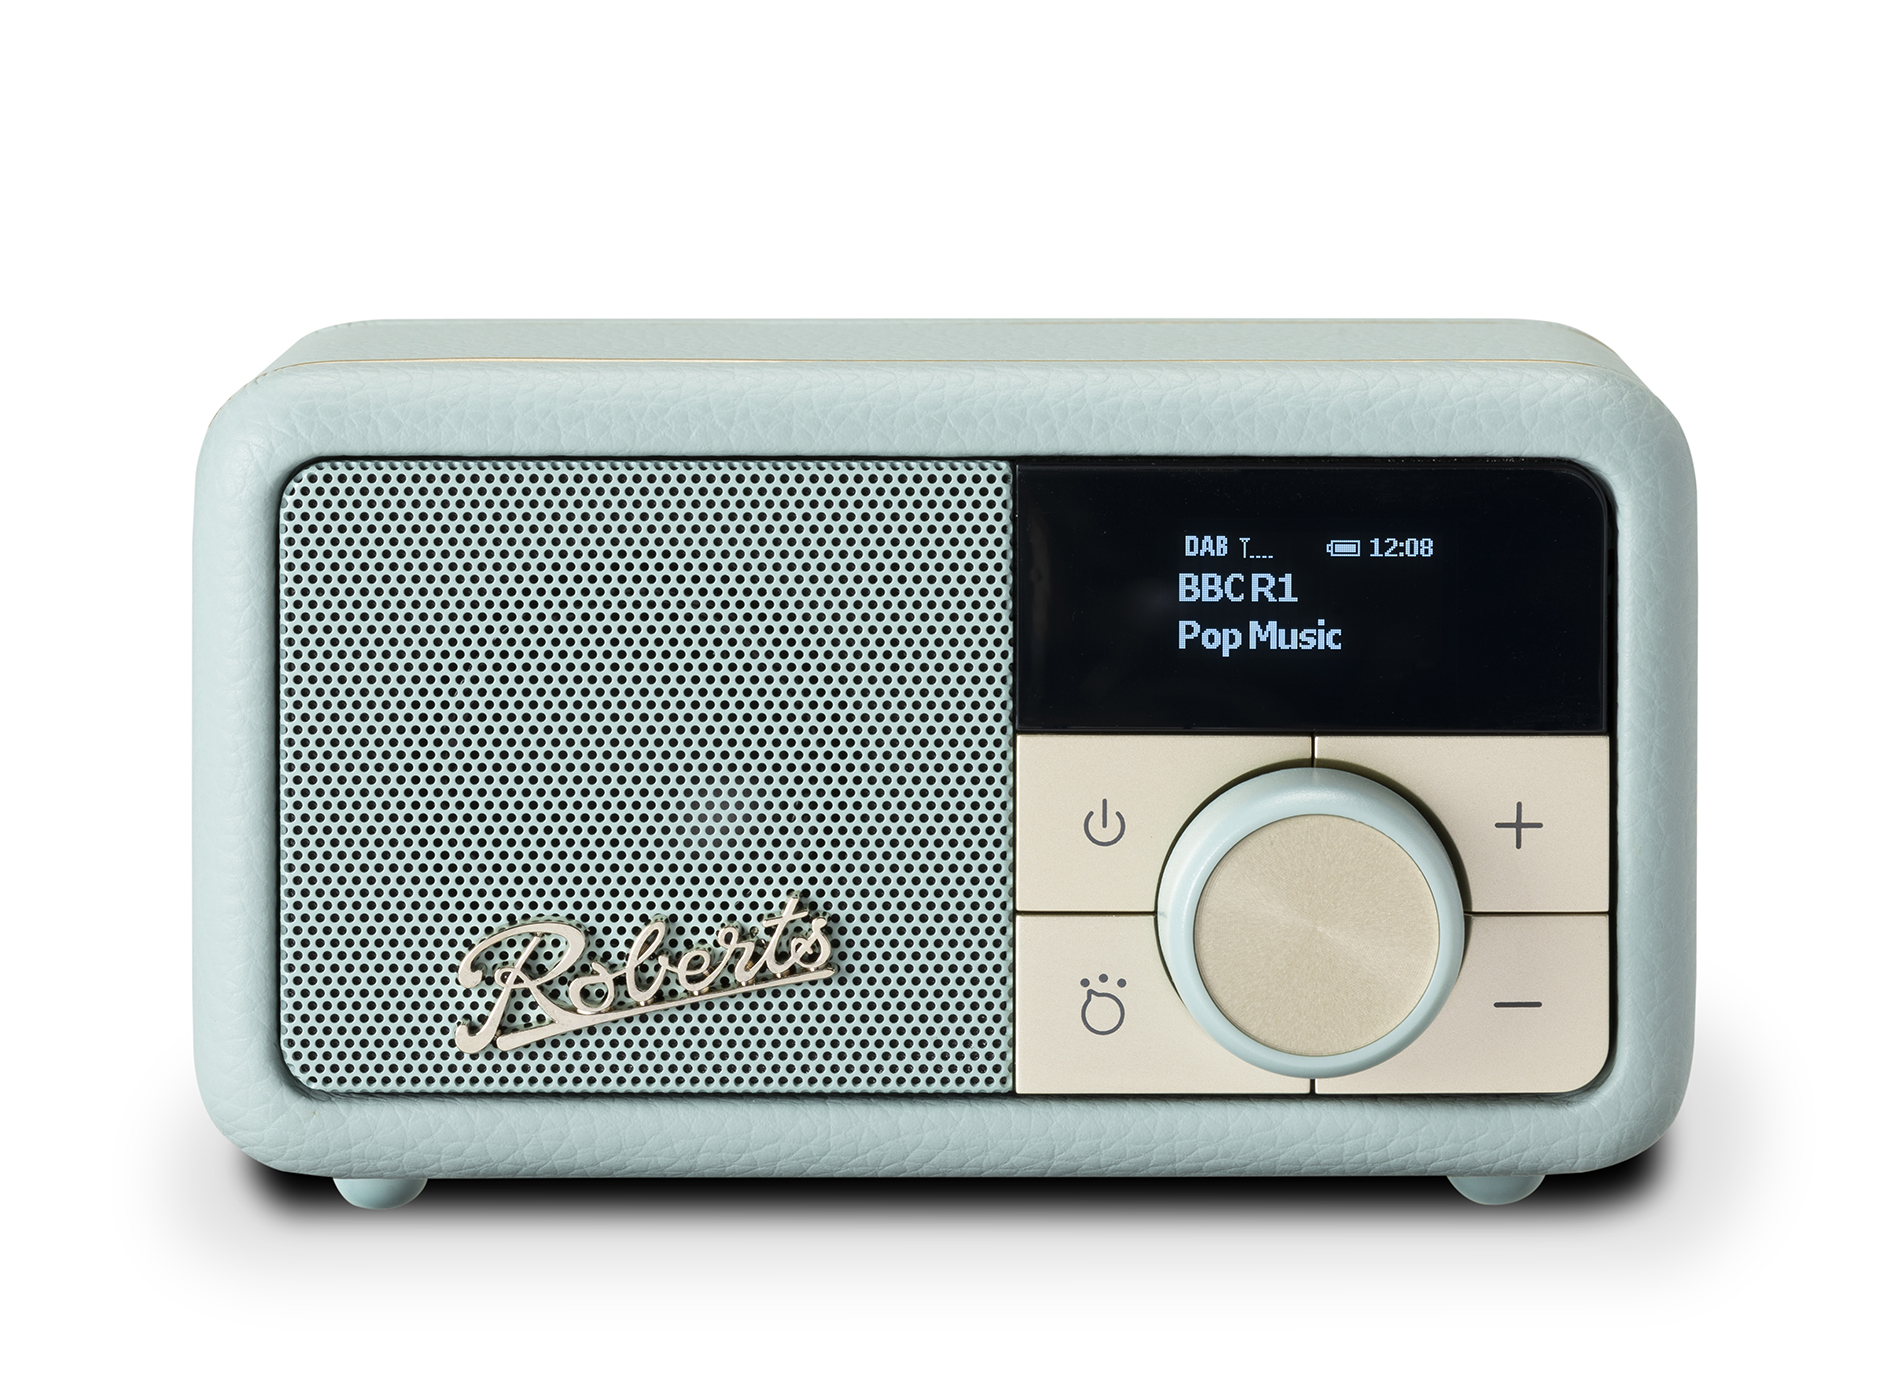 Roberts Revival Petite Bleu Ciel - Poste radio FM/DAB/Bluetooth